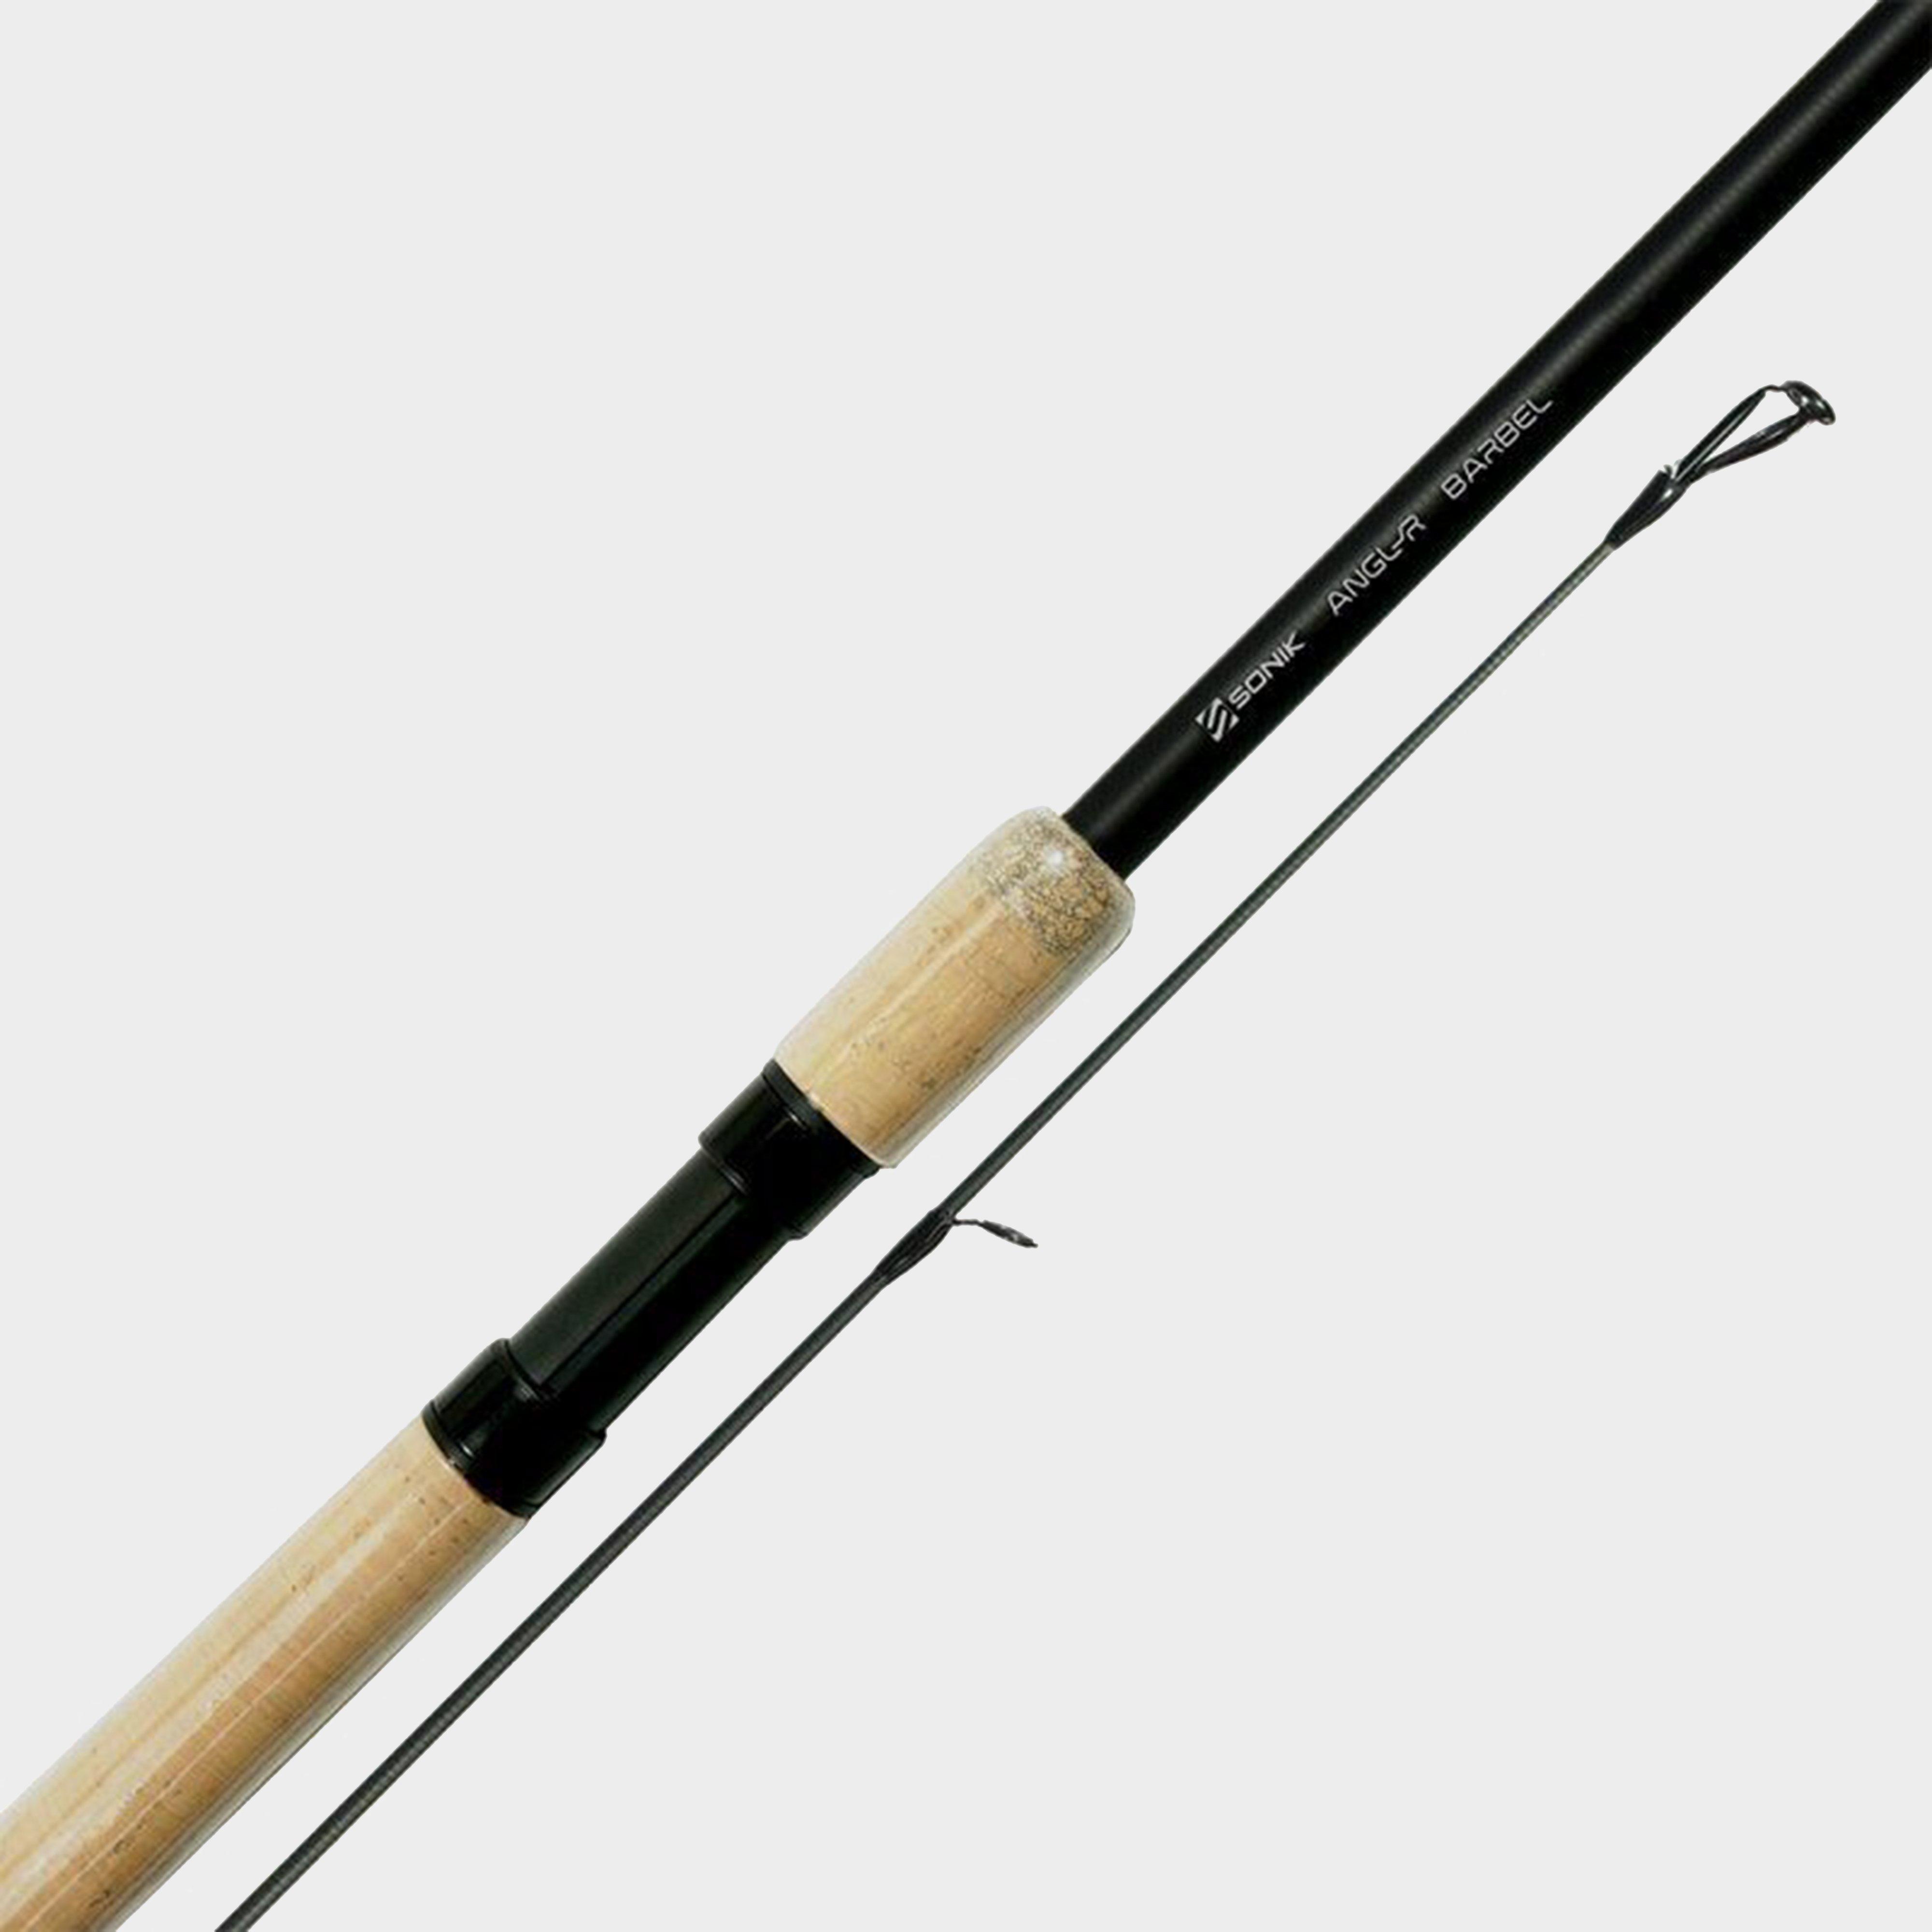  Sonik Angl-R Twin Top Fishing Rod 12ft 1.25lb - 1.75lb, Black